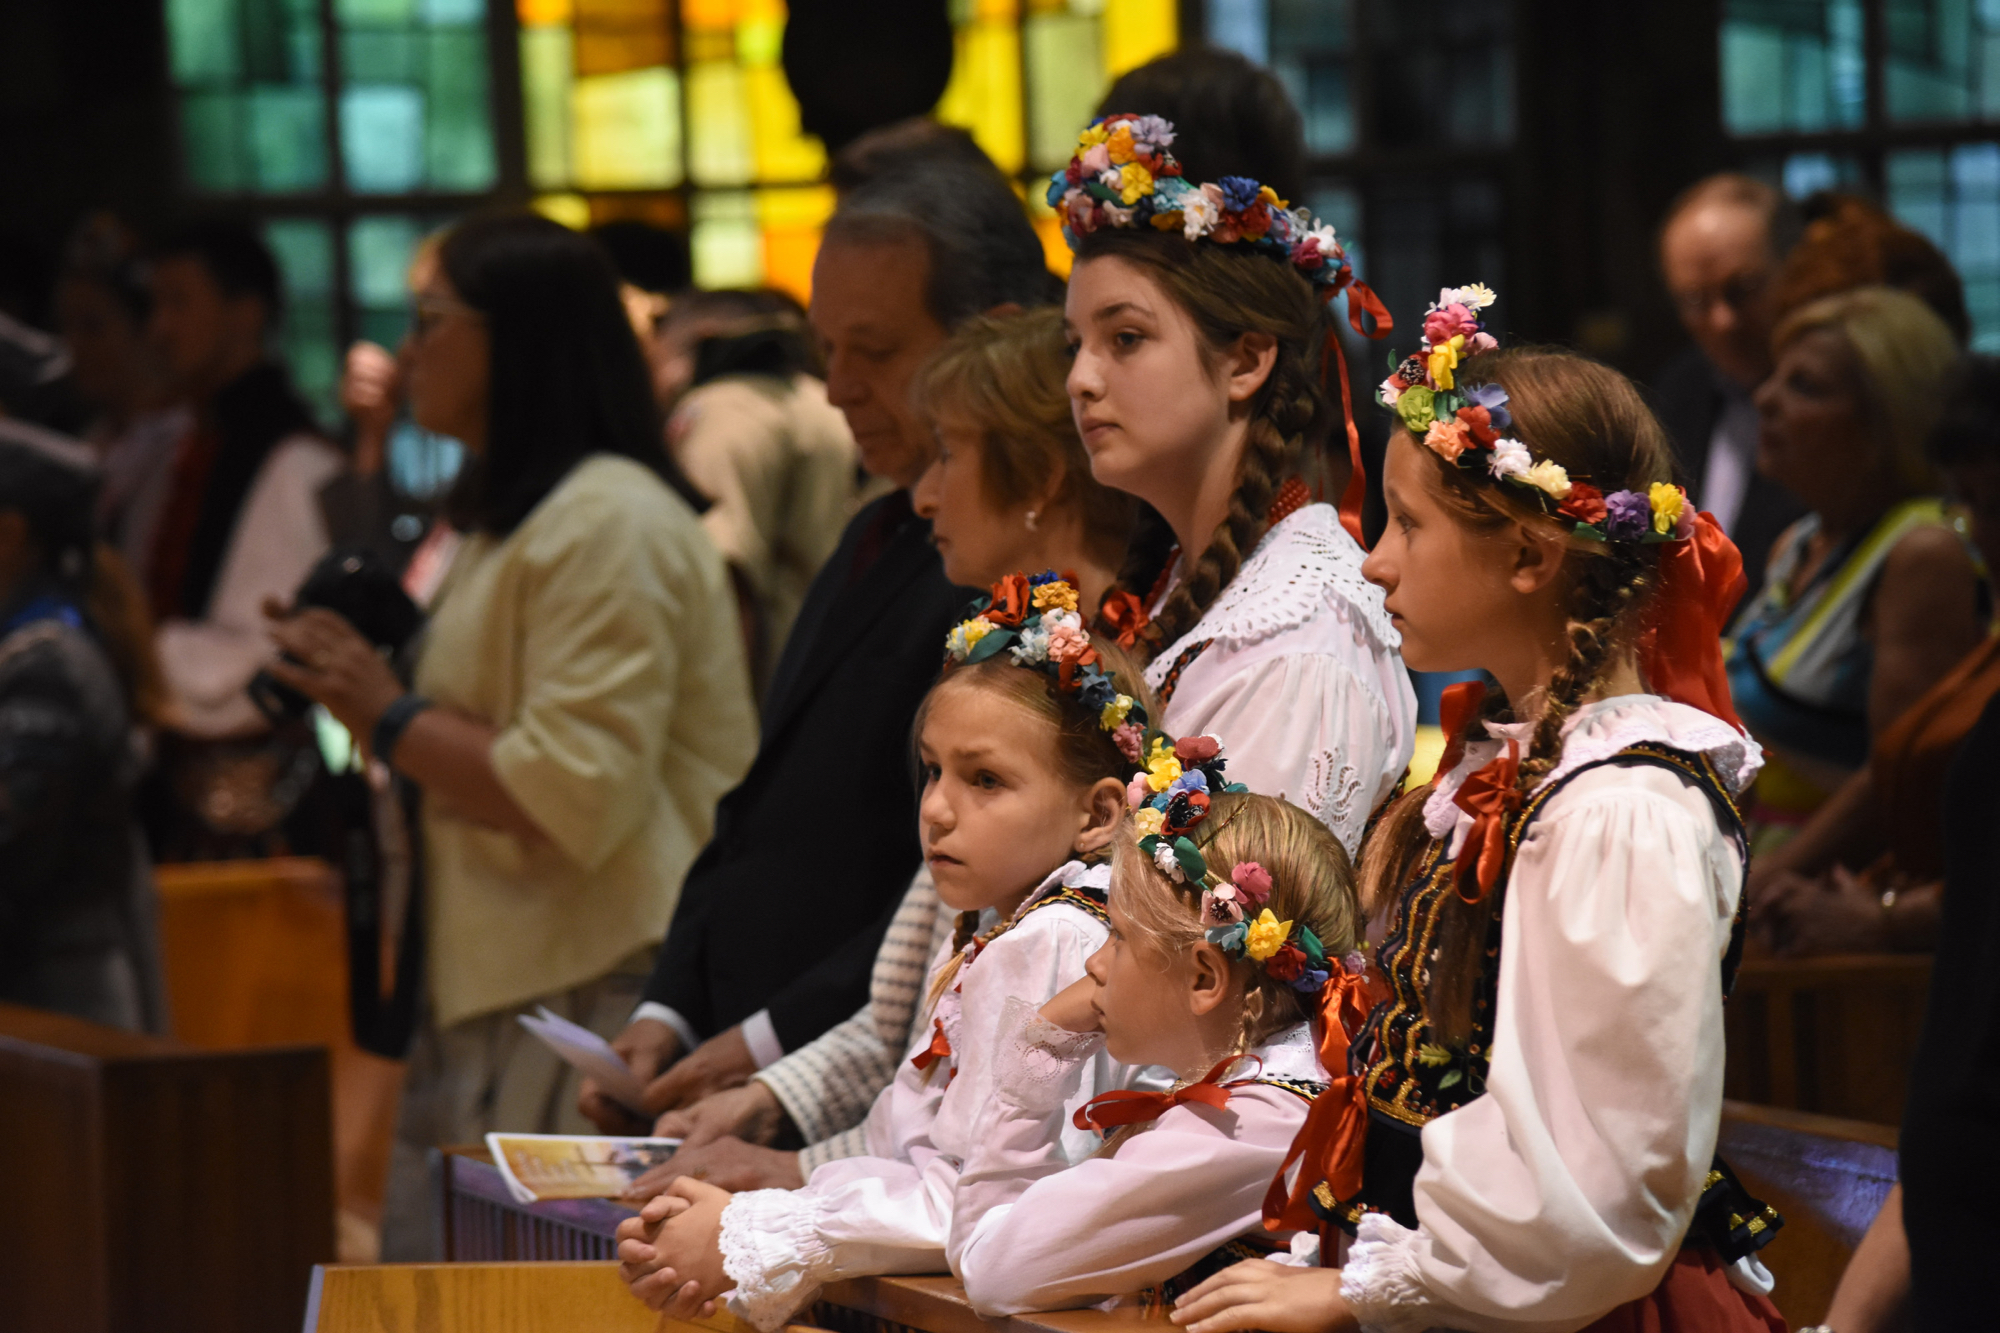 Polish bishops explain policy changes on migrant Catholics